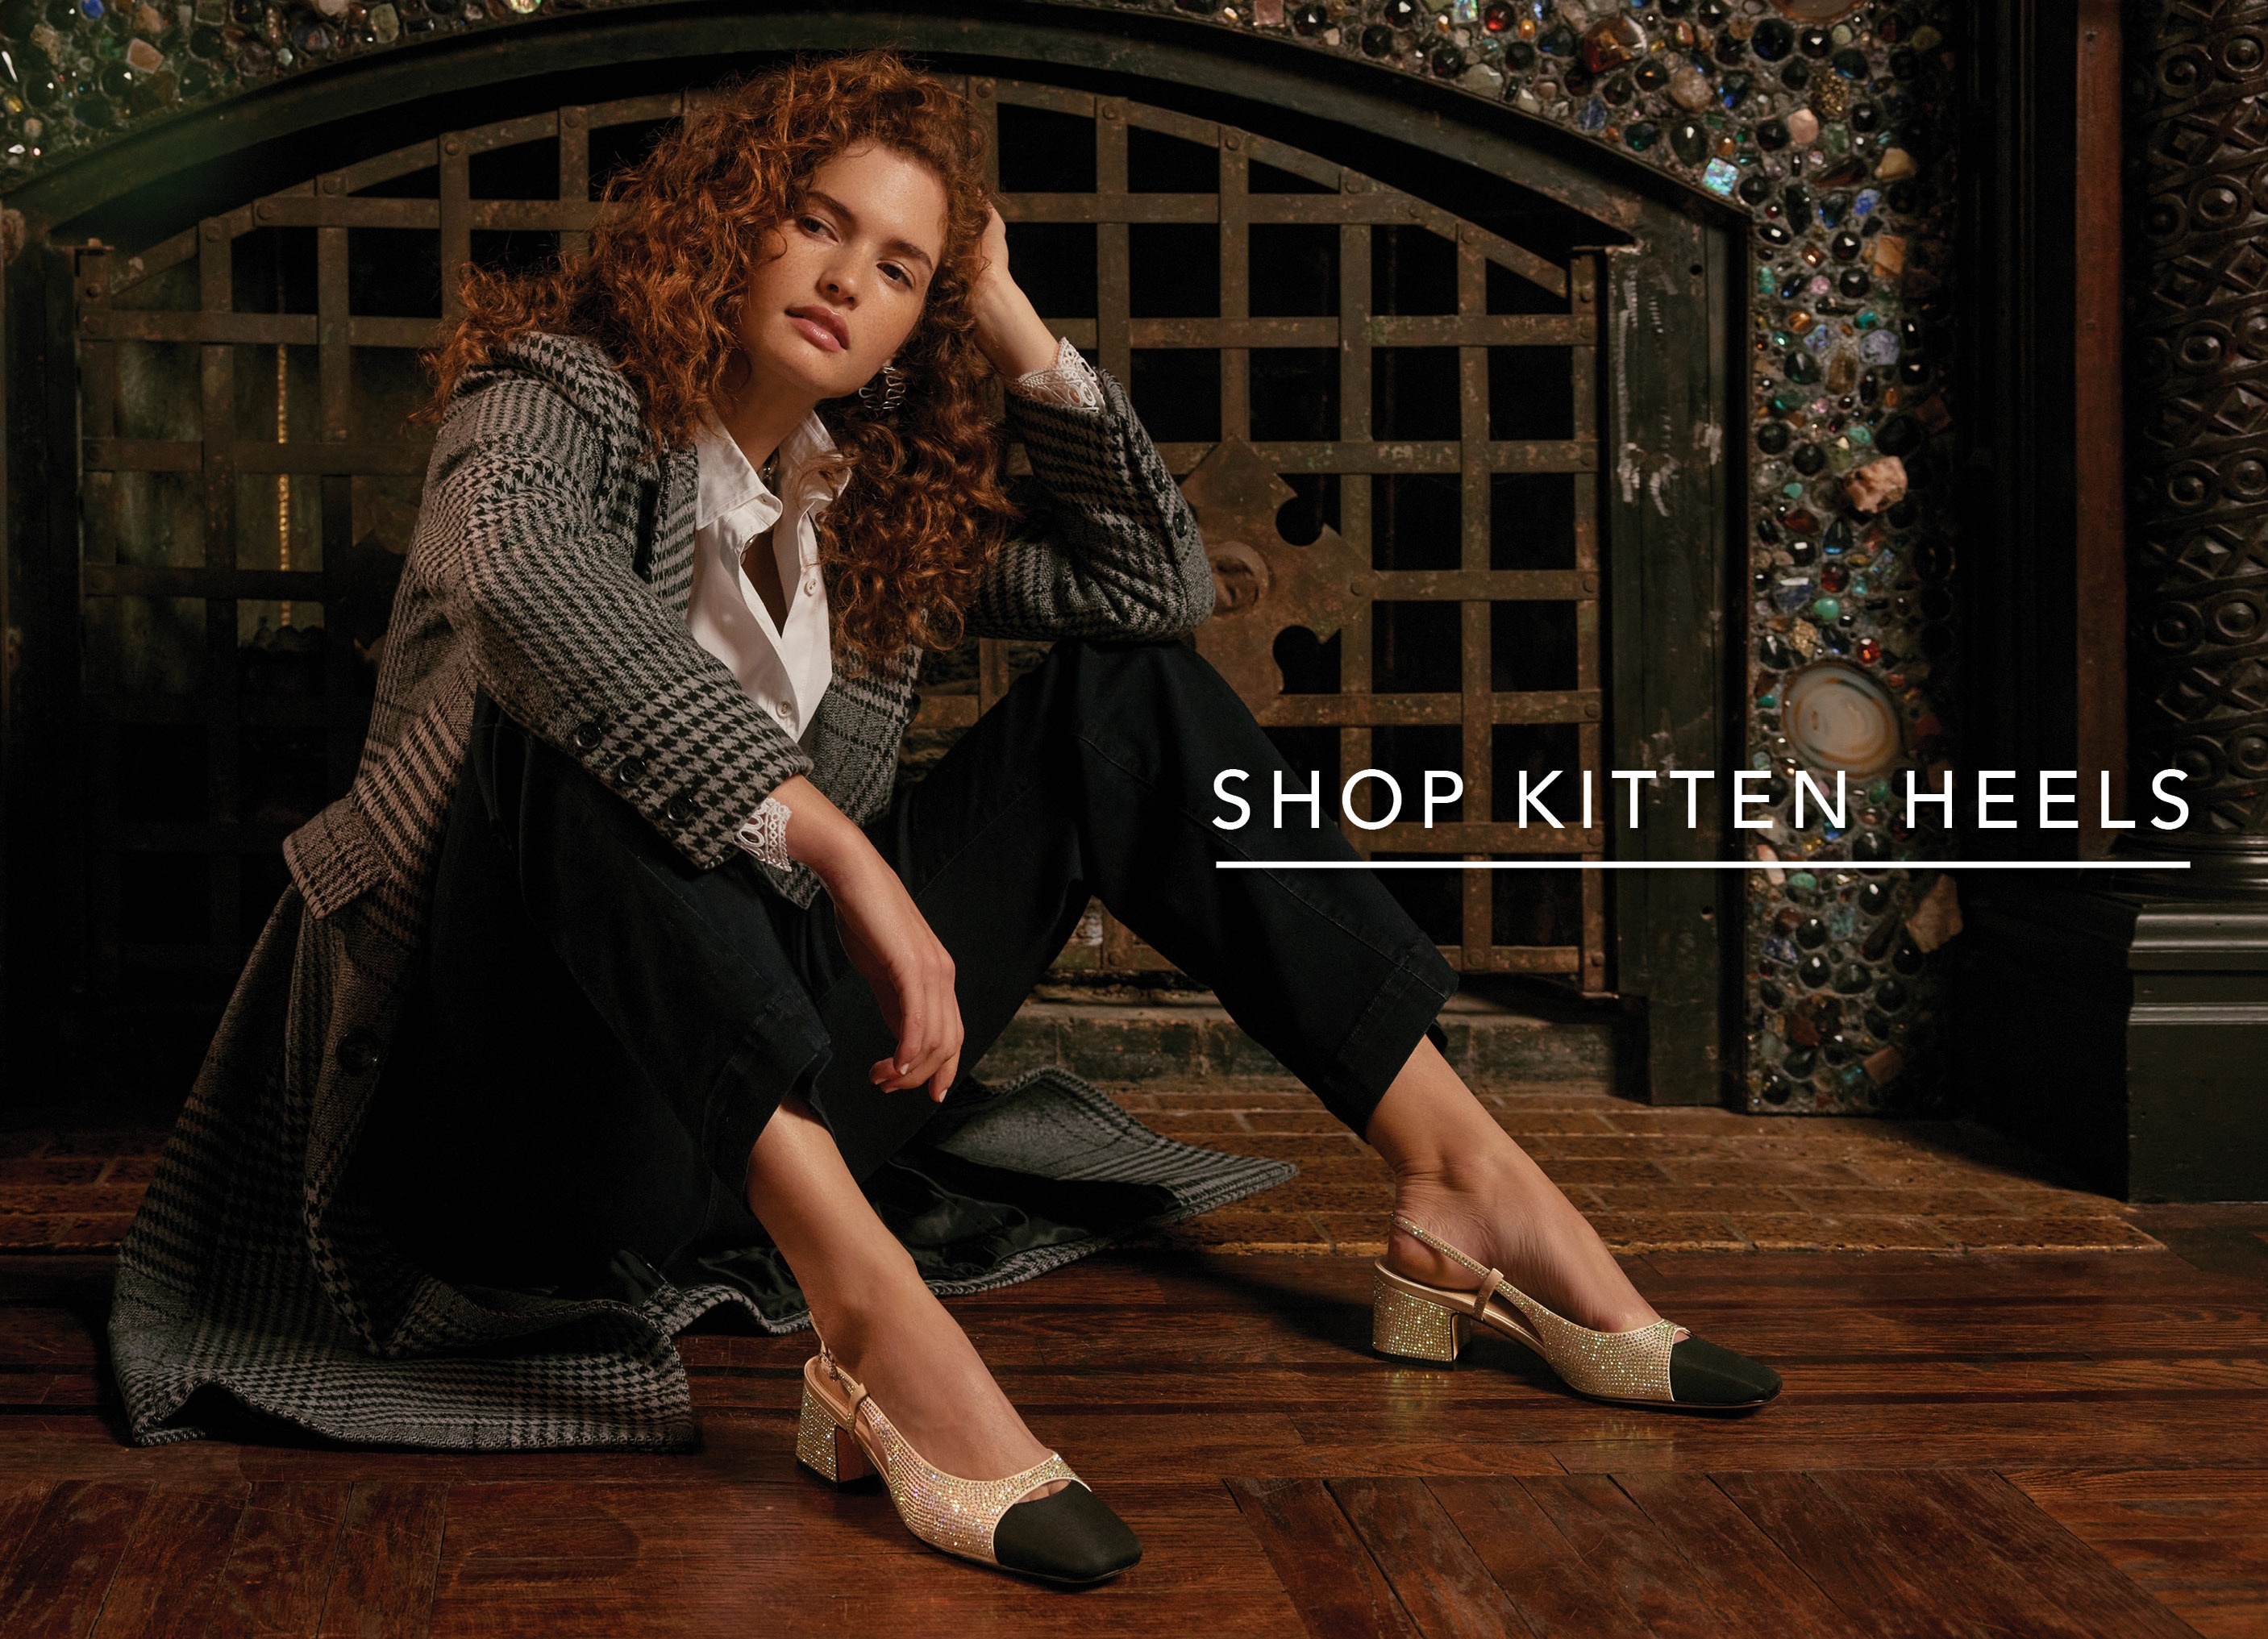 Shop kitten heels from Sam Edelman